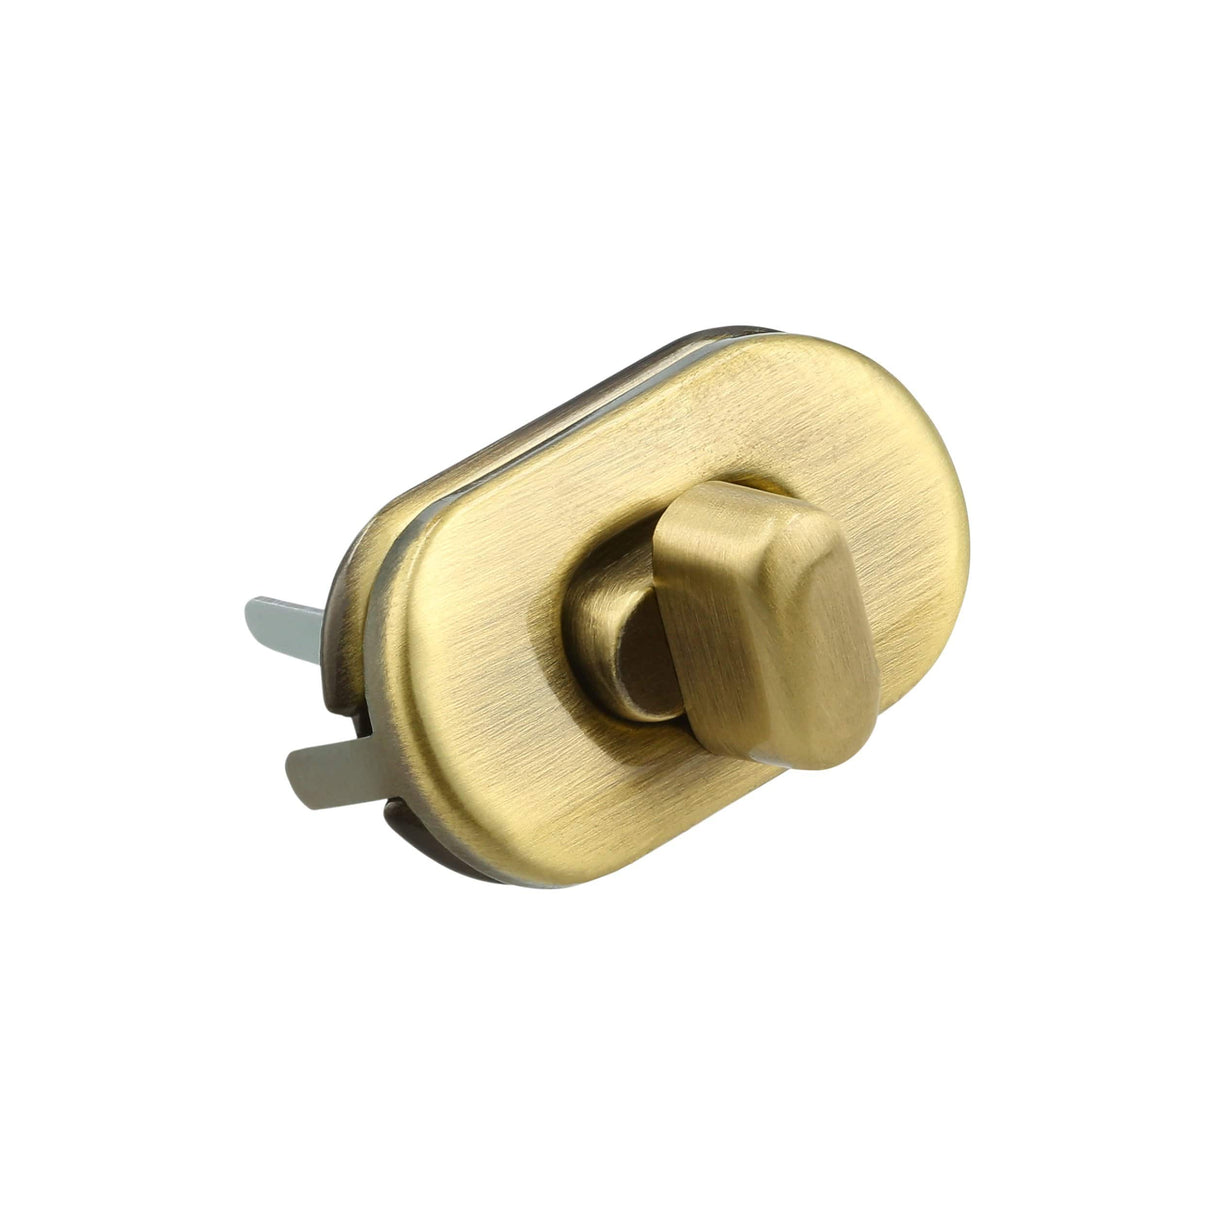 Oval Turn Locks Bag Hardware - 1 3/8 x 3/4 - Antique Brass